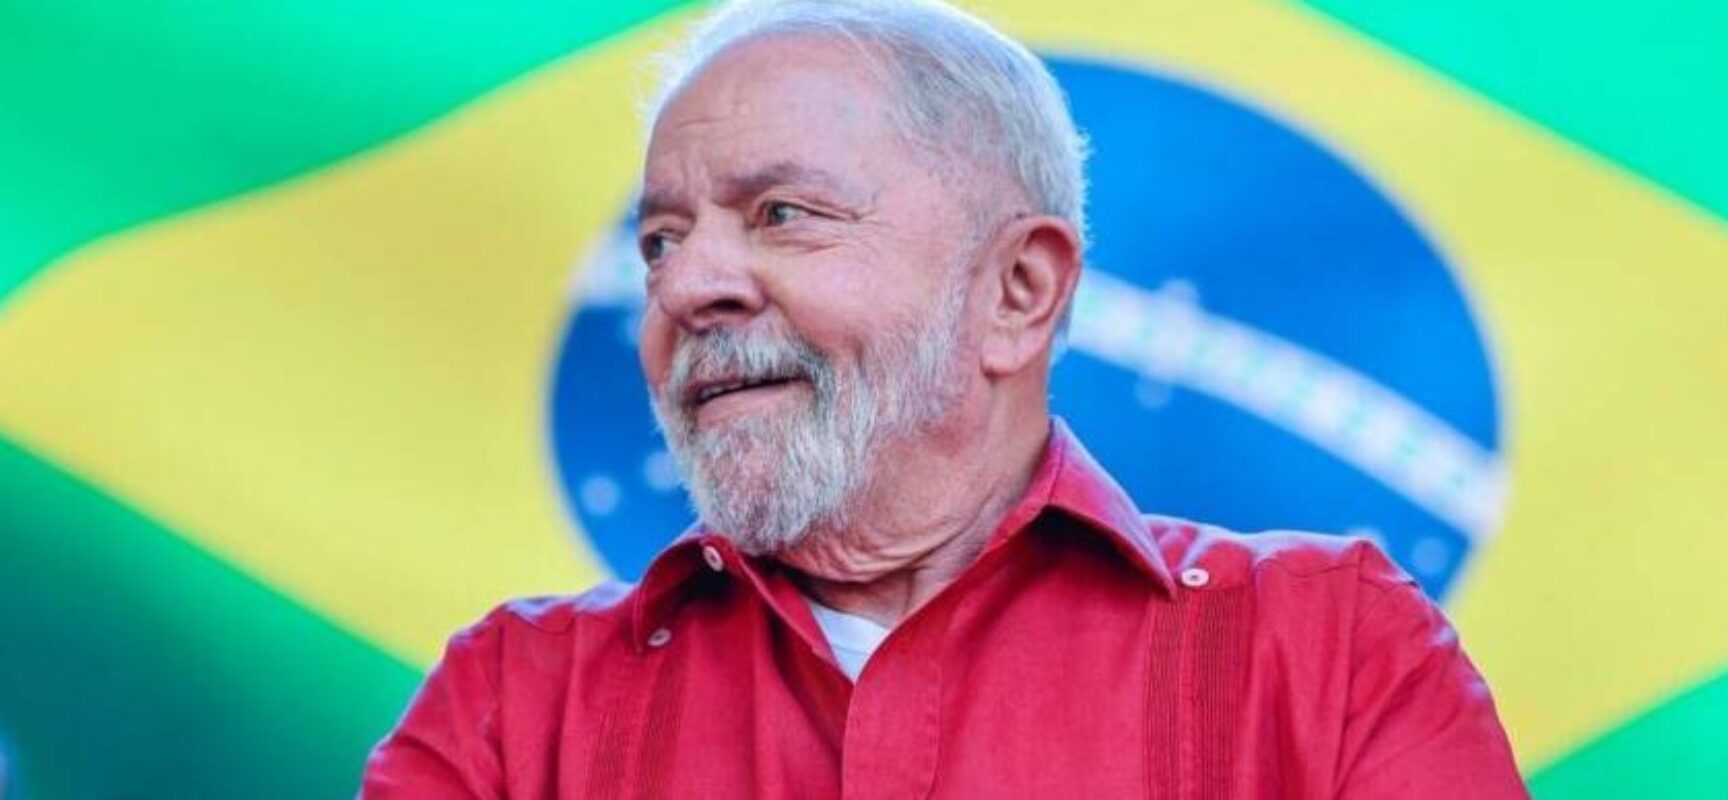 Grupo que representa povo brasileiro deve passar a faixa para Lula diante de recusa de Bolsonaro